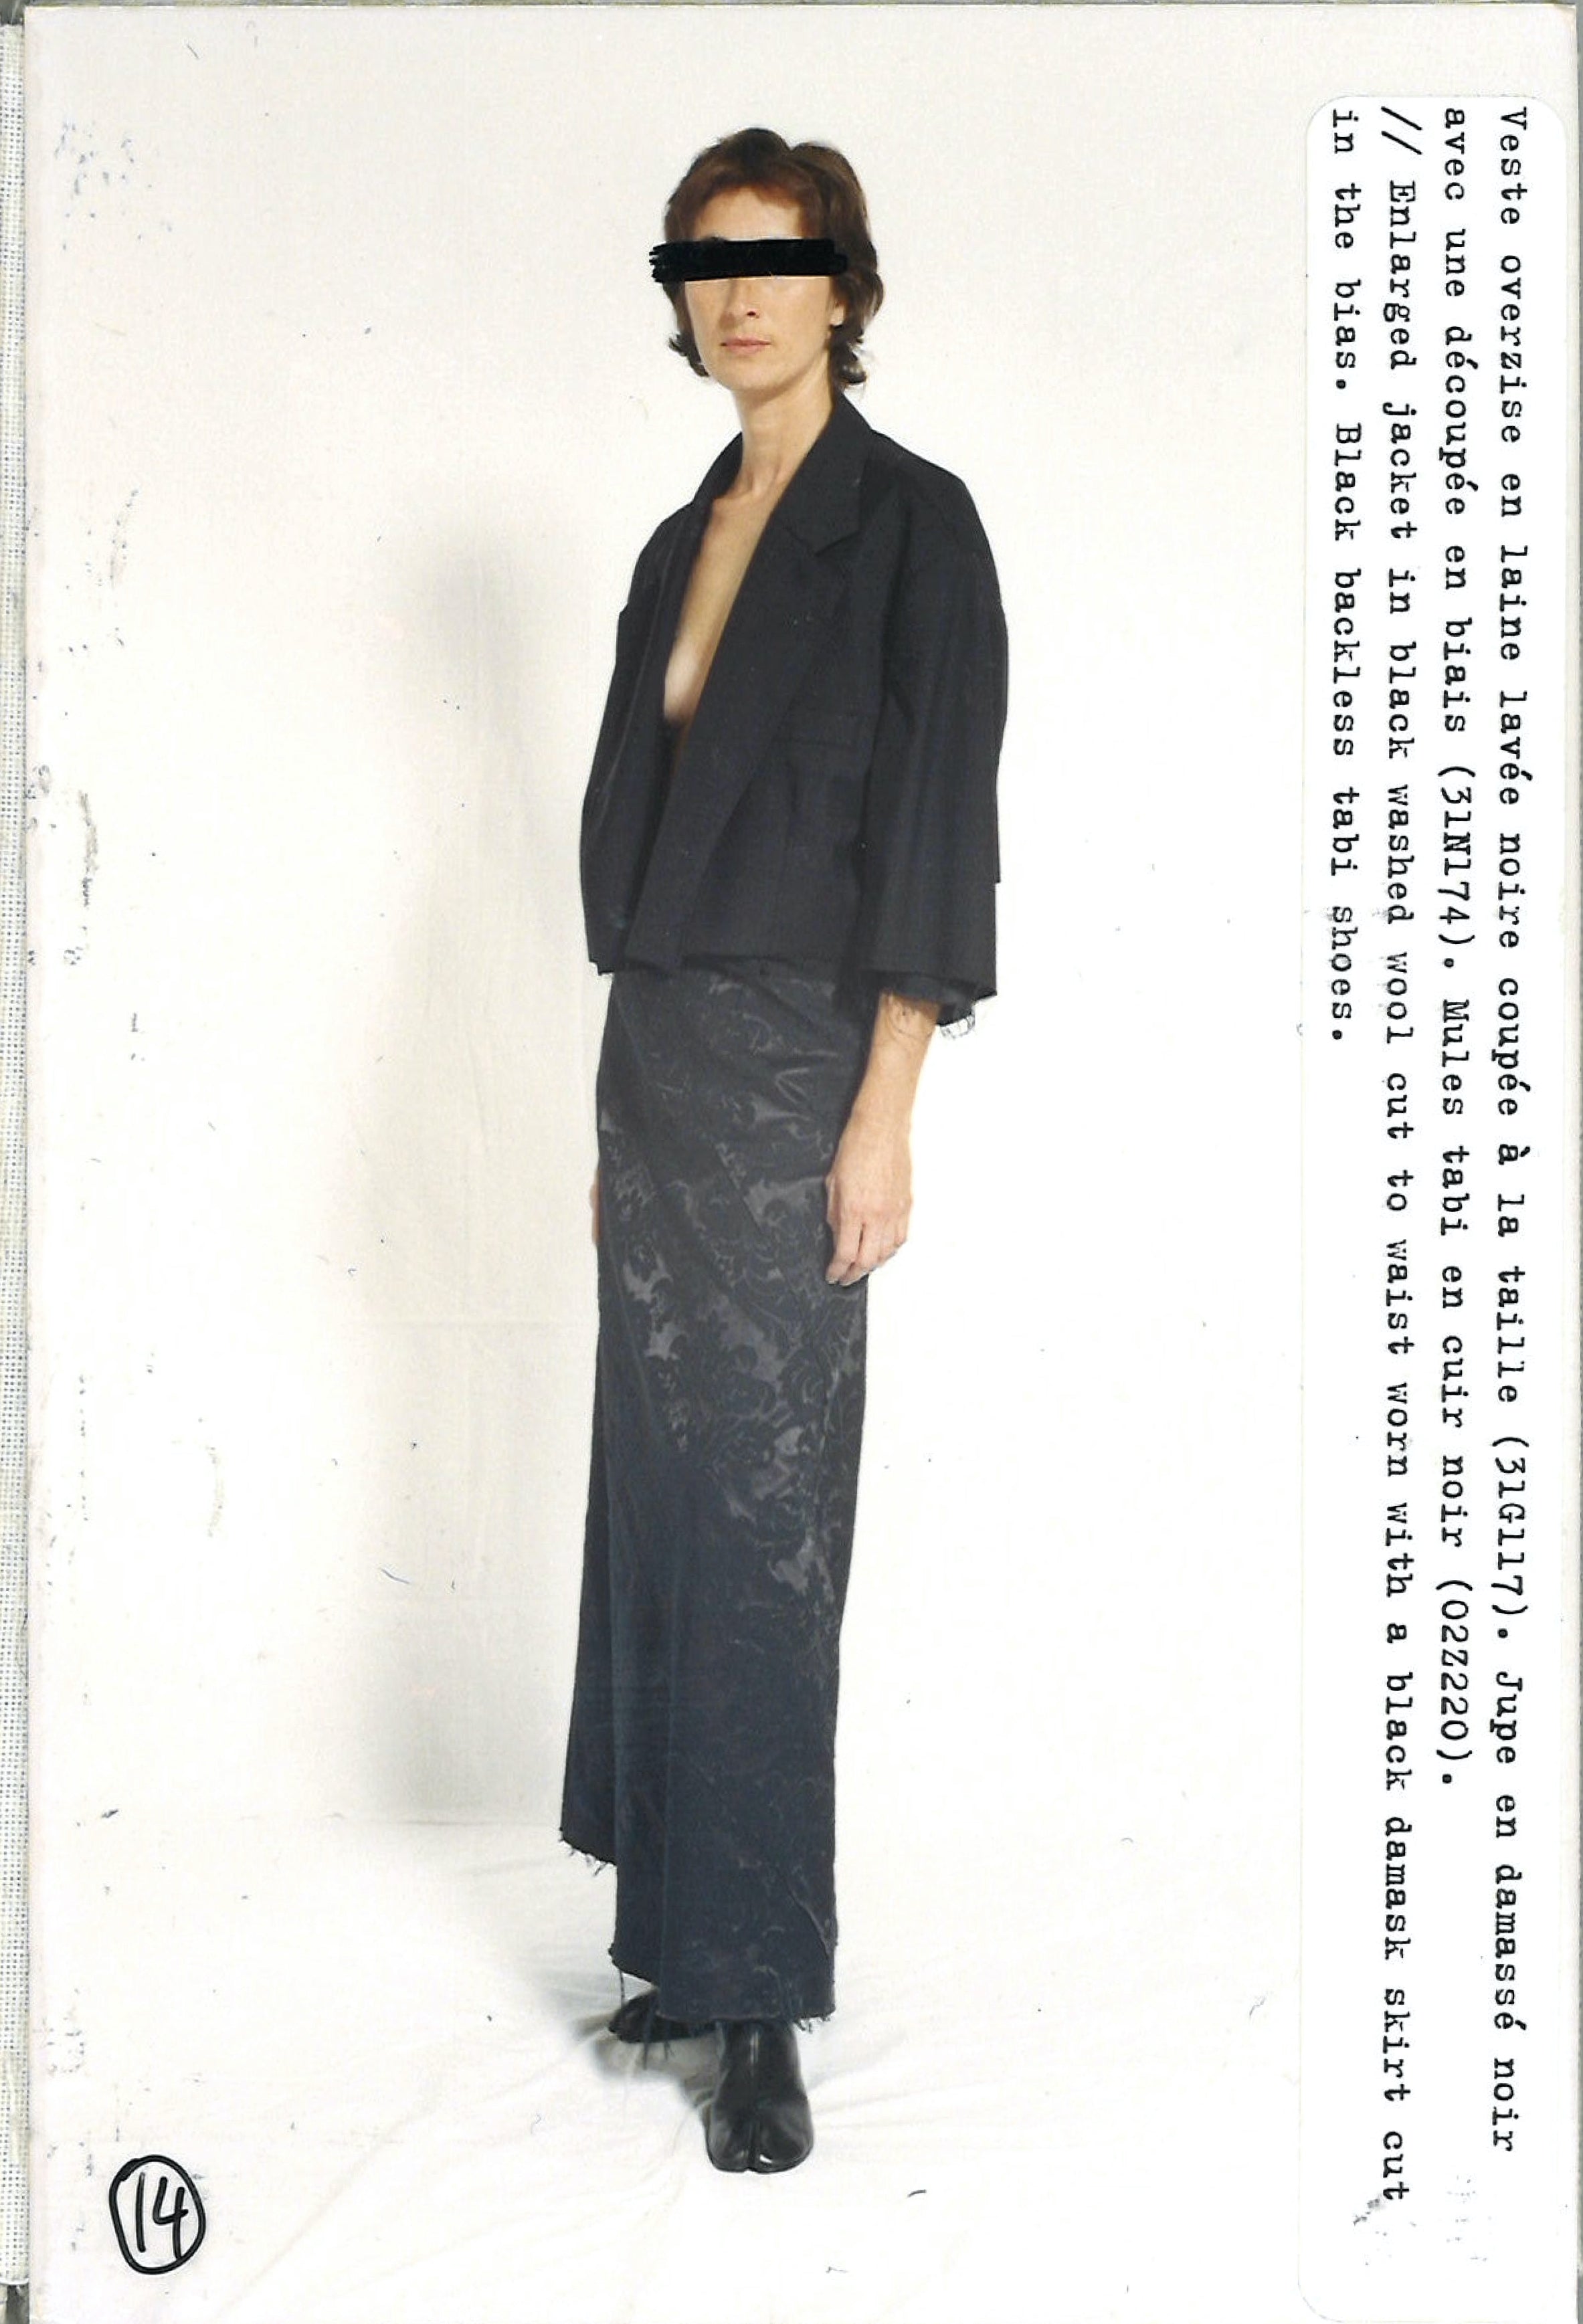 Maison Martin Margiela Lookbook
Womenswear Collection Spring/Summer 2002